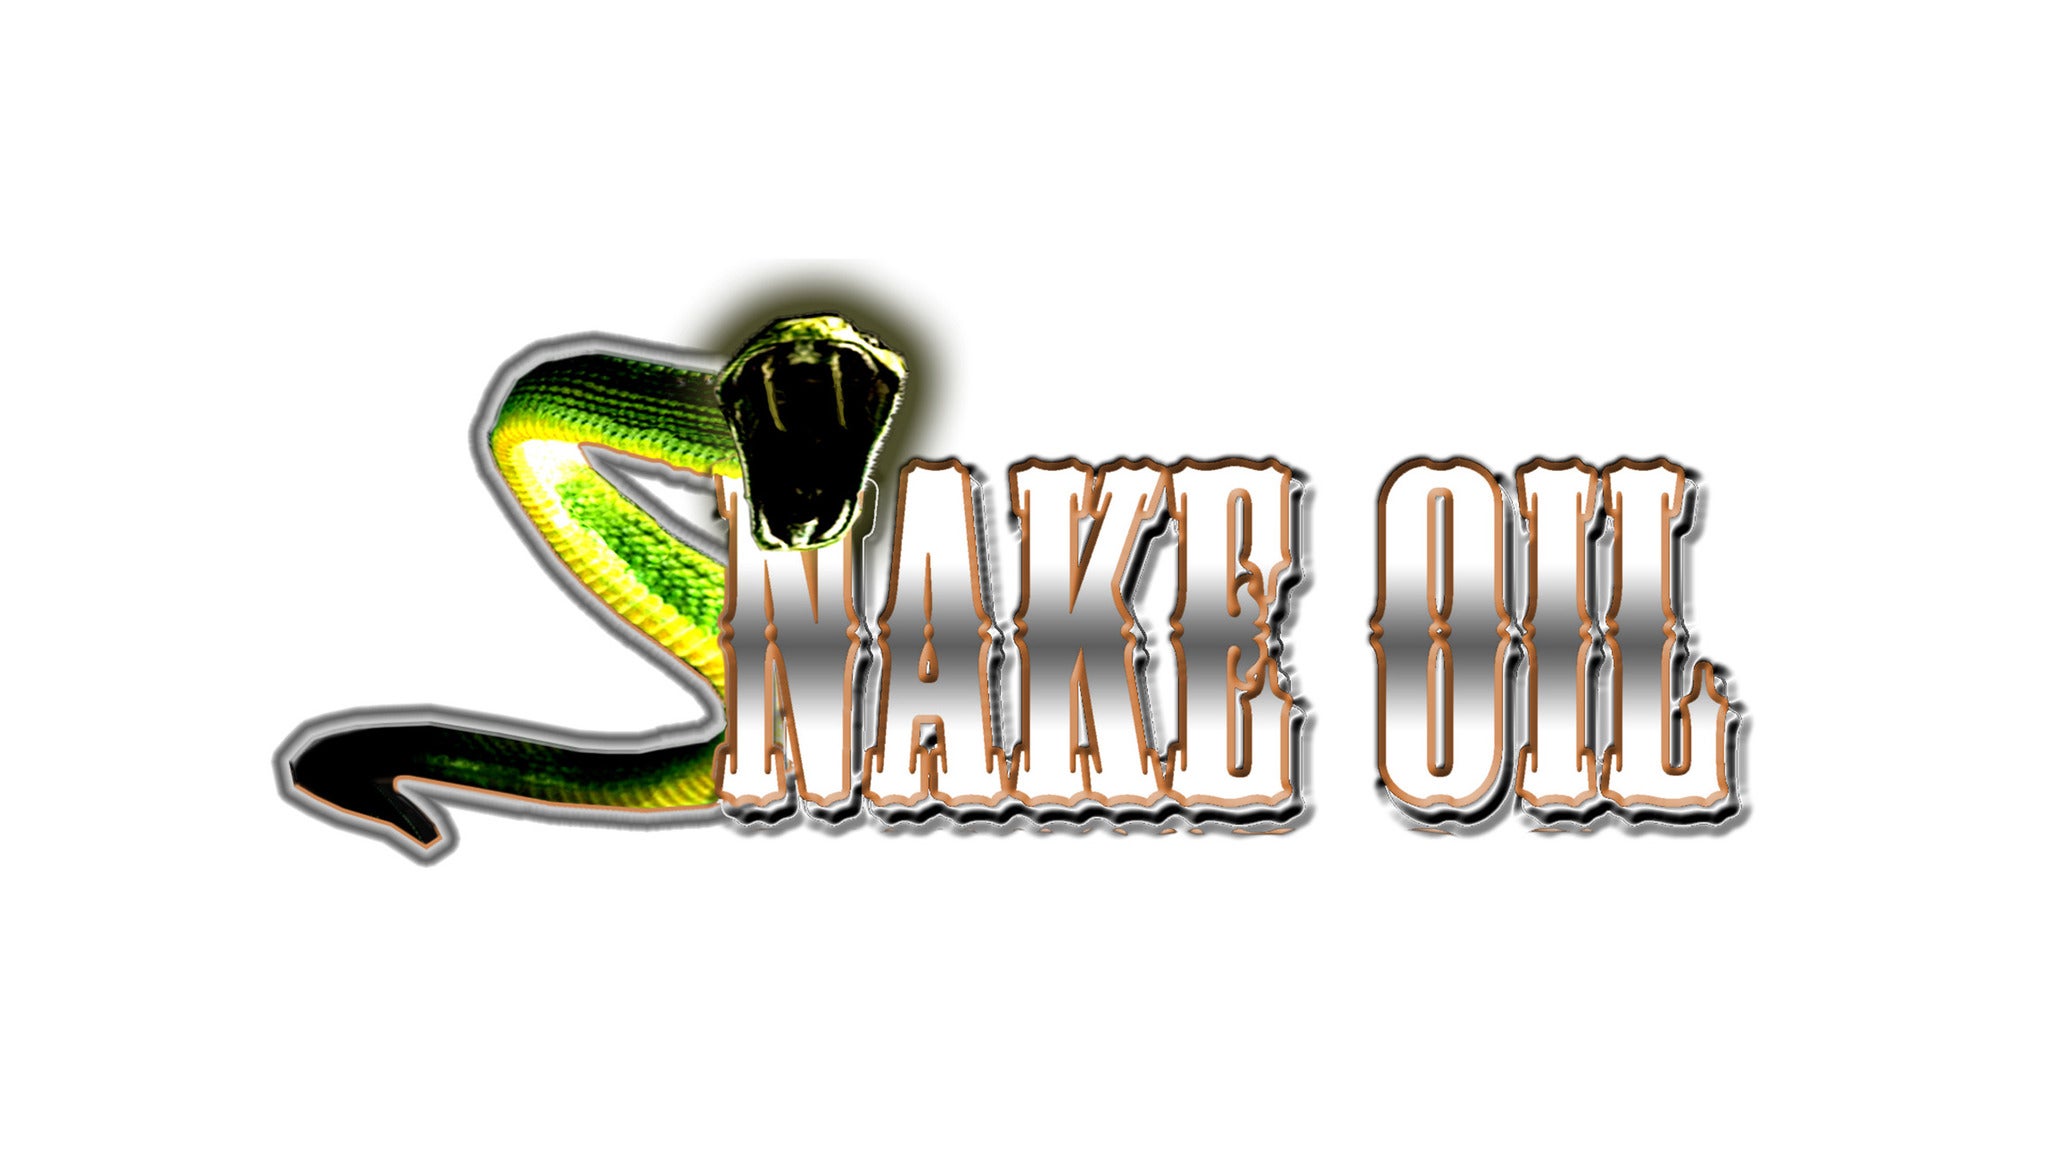 Snake Oil in Winnipeg promo photo for Club Card & Radio presale offer code